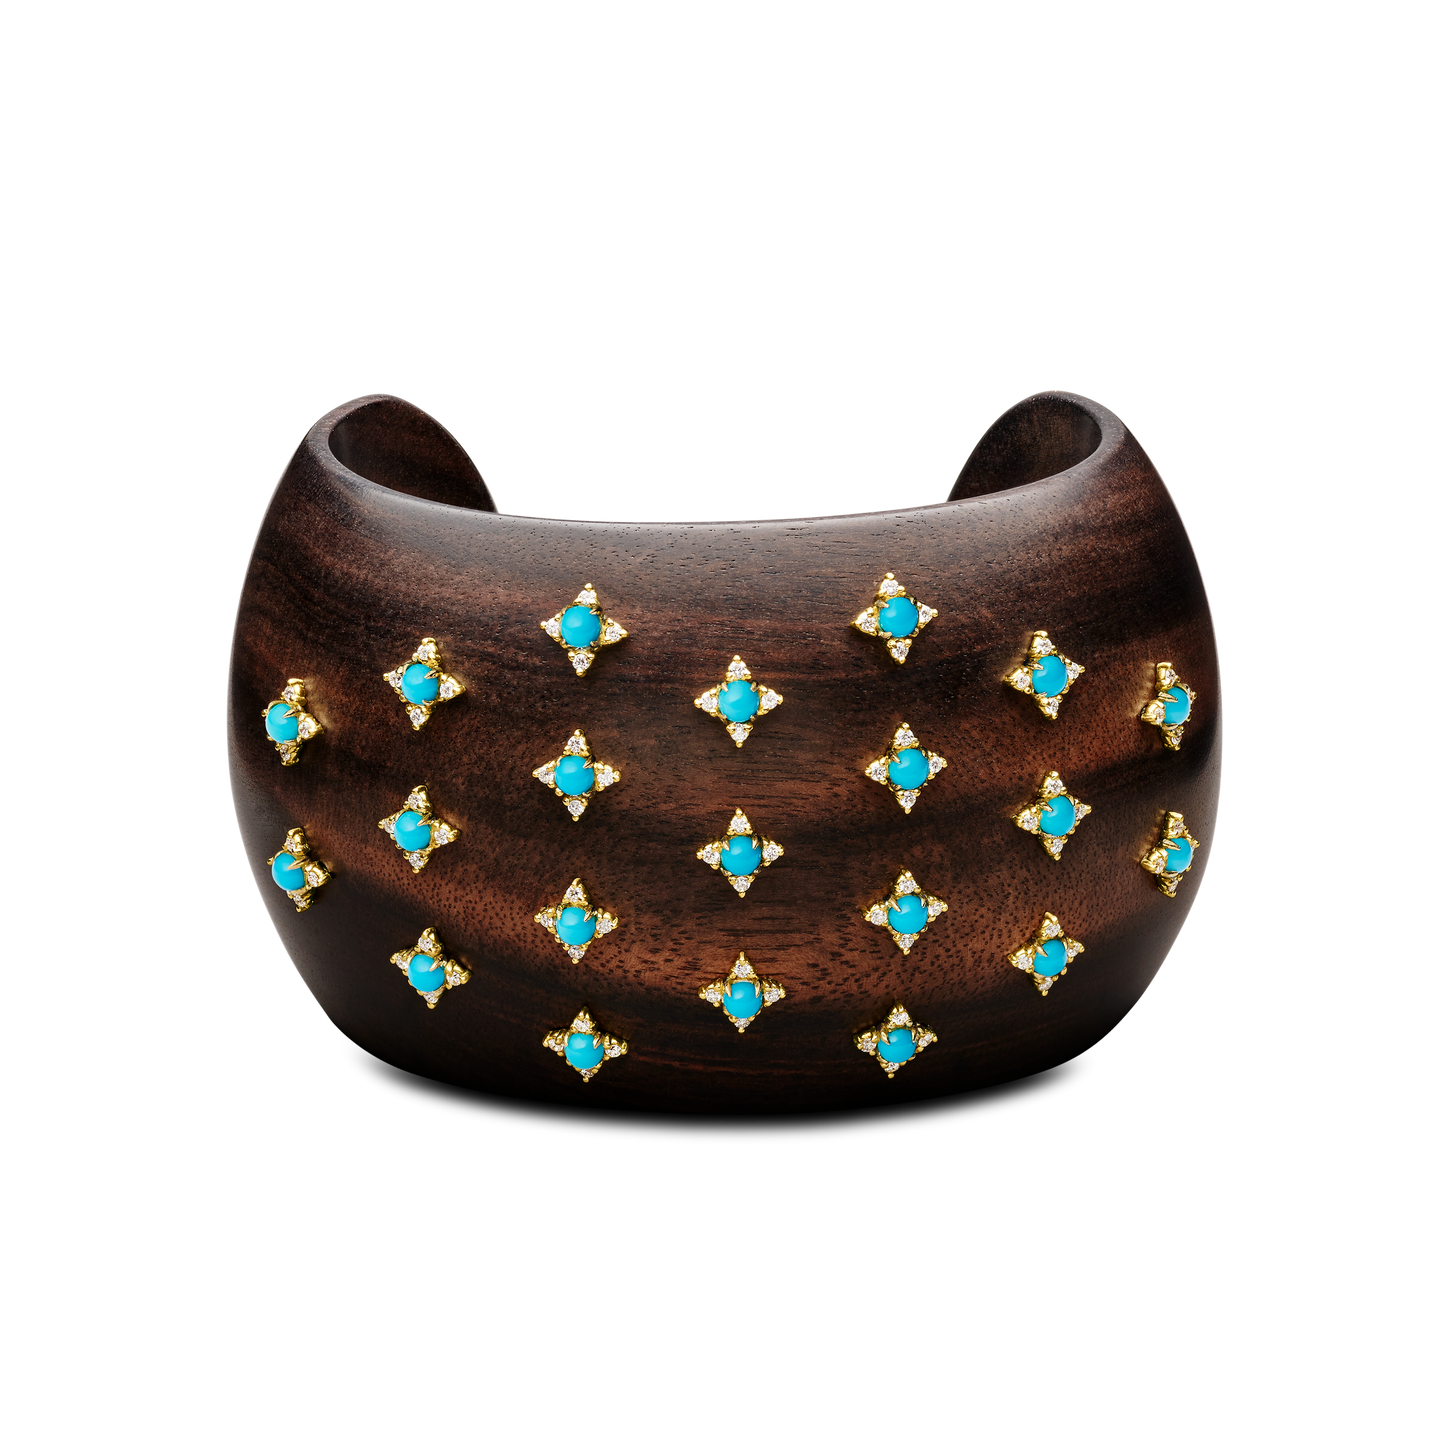 Macassar Ebony Carved Wood Cuff Bracelet